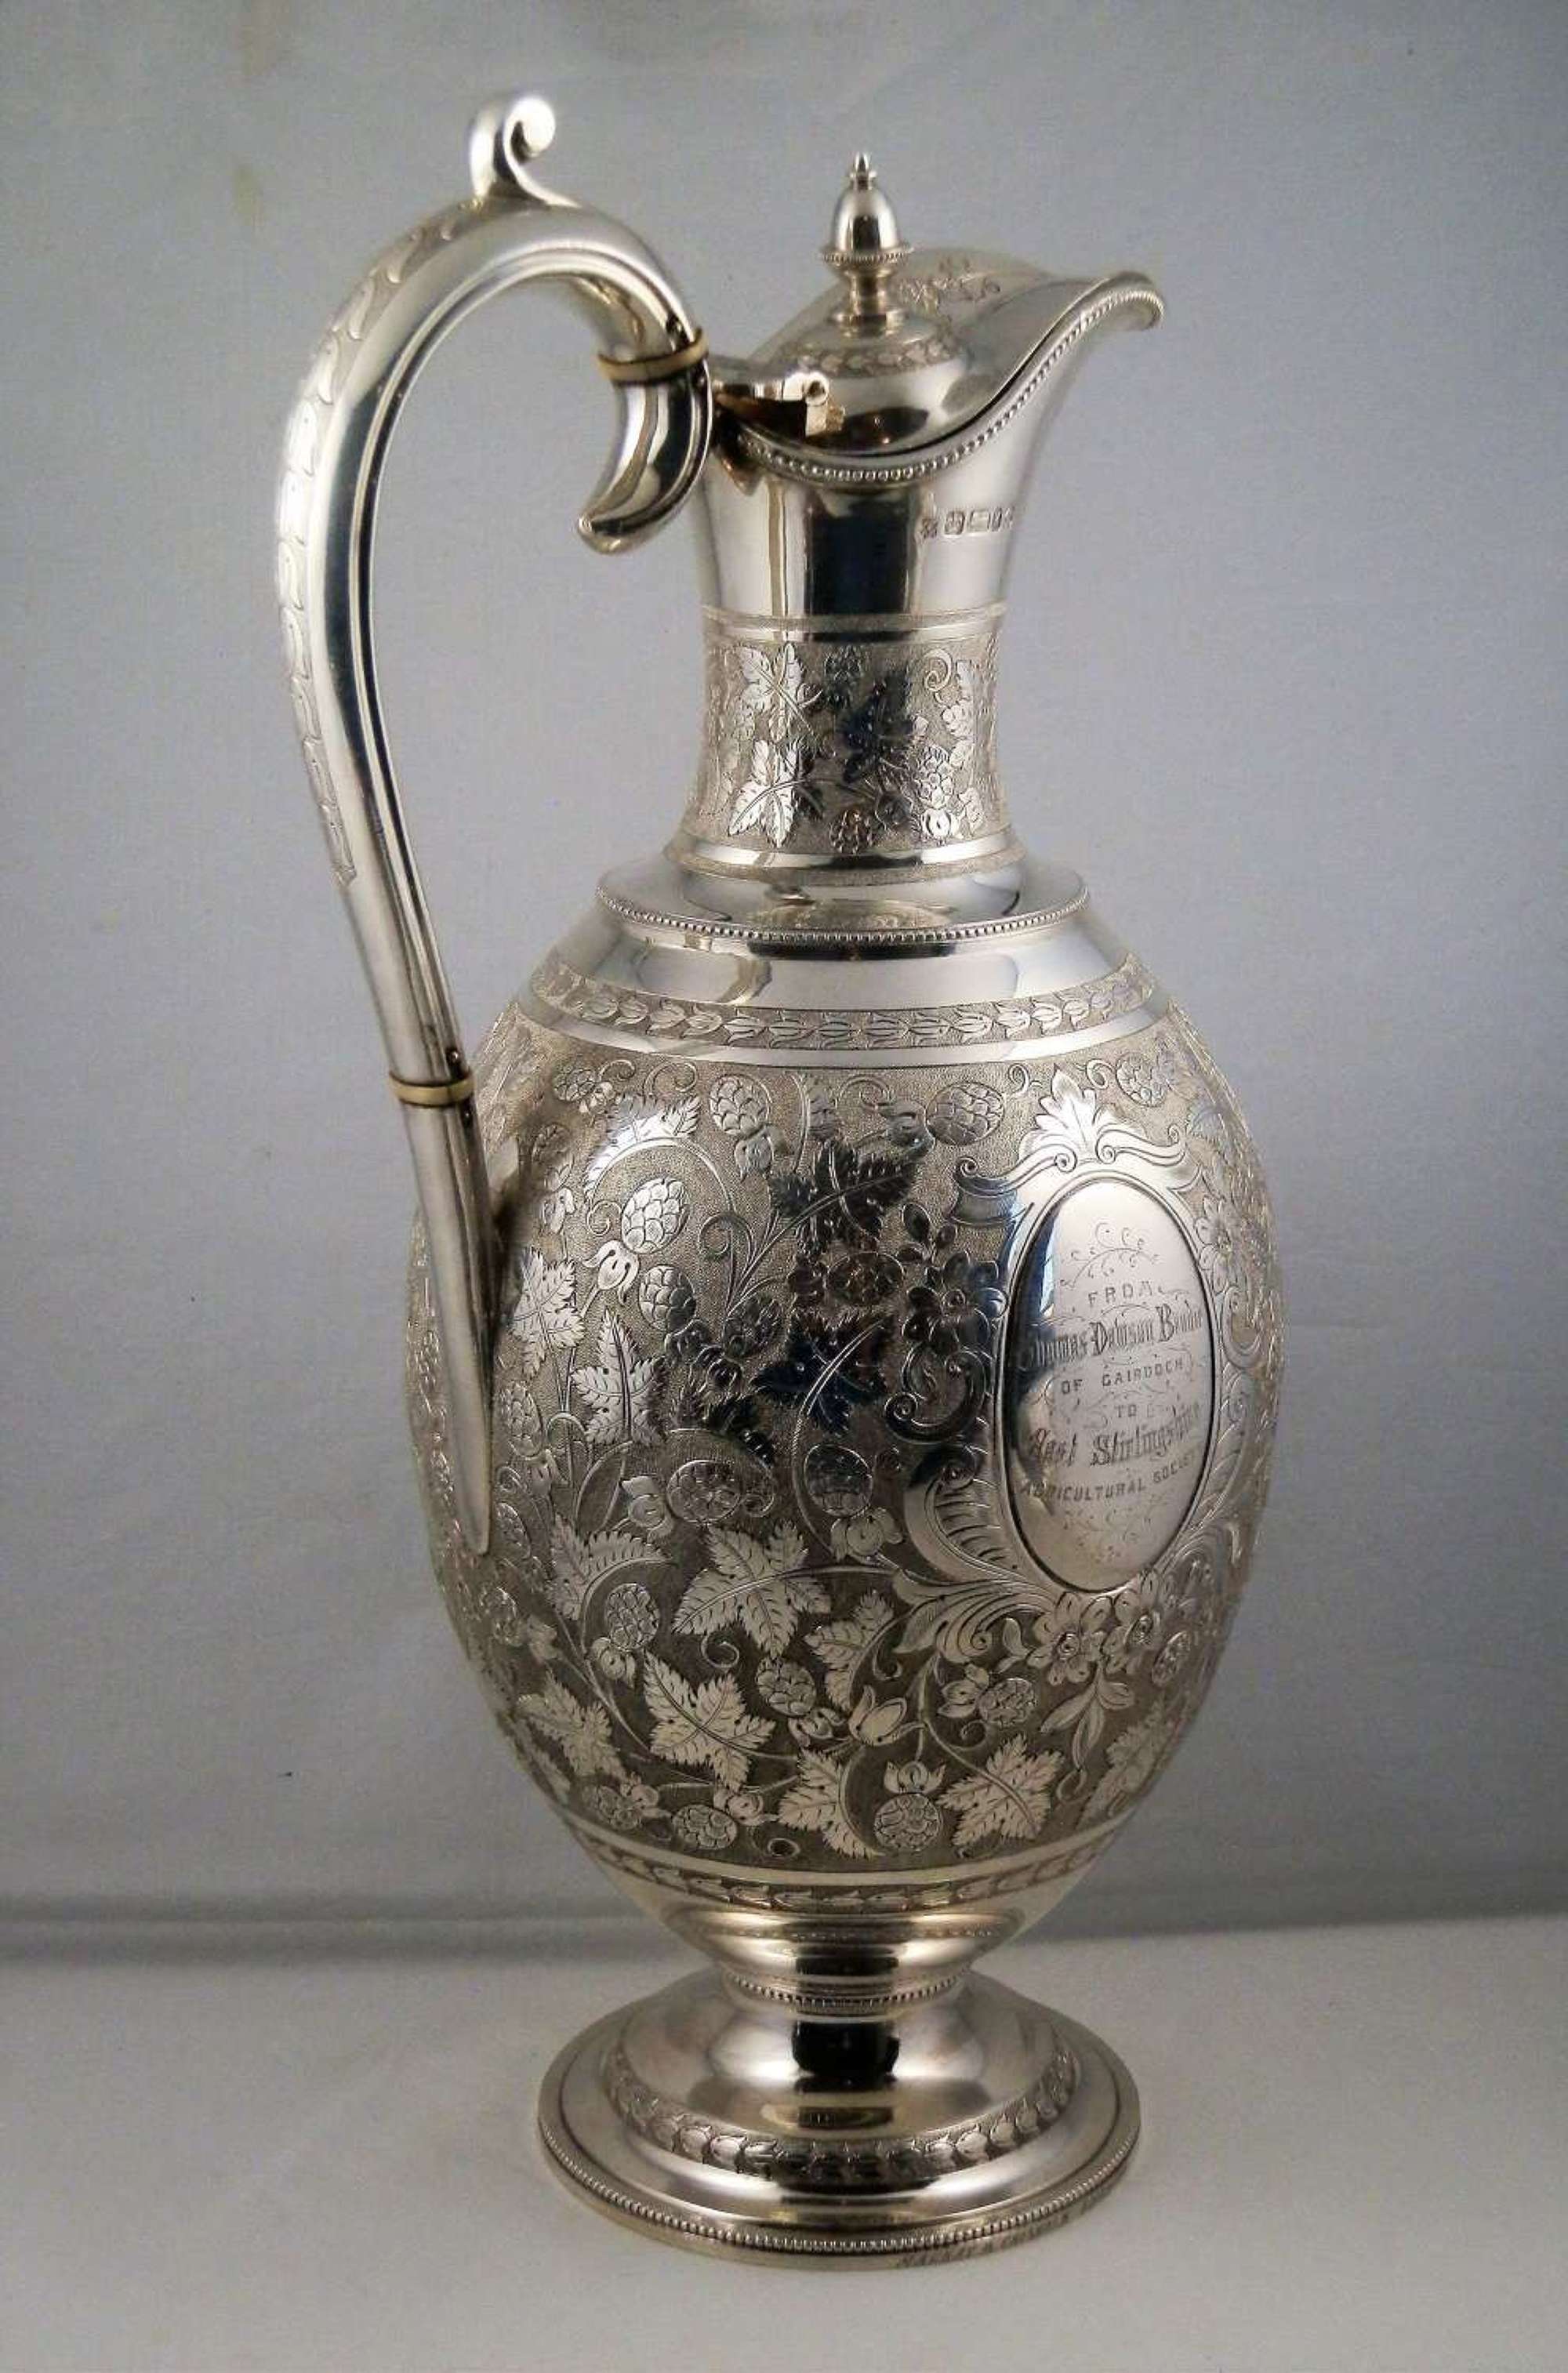 An ornate Victorian silver presentation claret jug, 1877